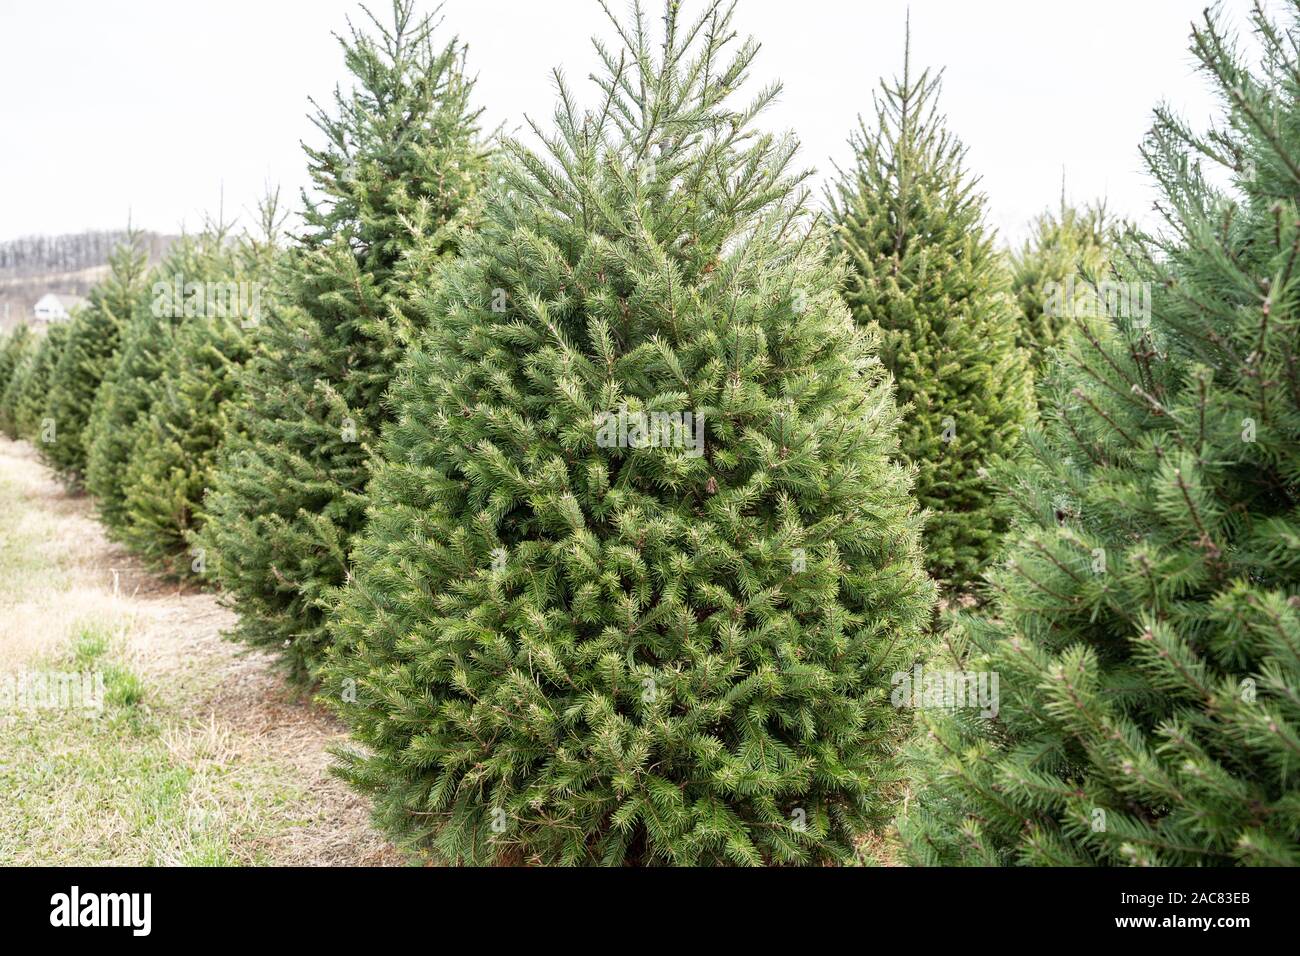 Rows of douglas fir Christmas trees at local Christmas tree farm. Stock Photo